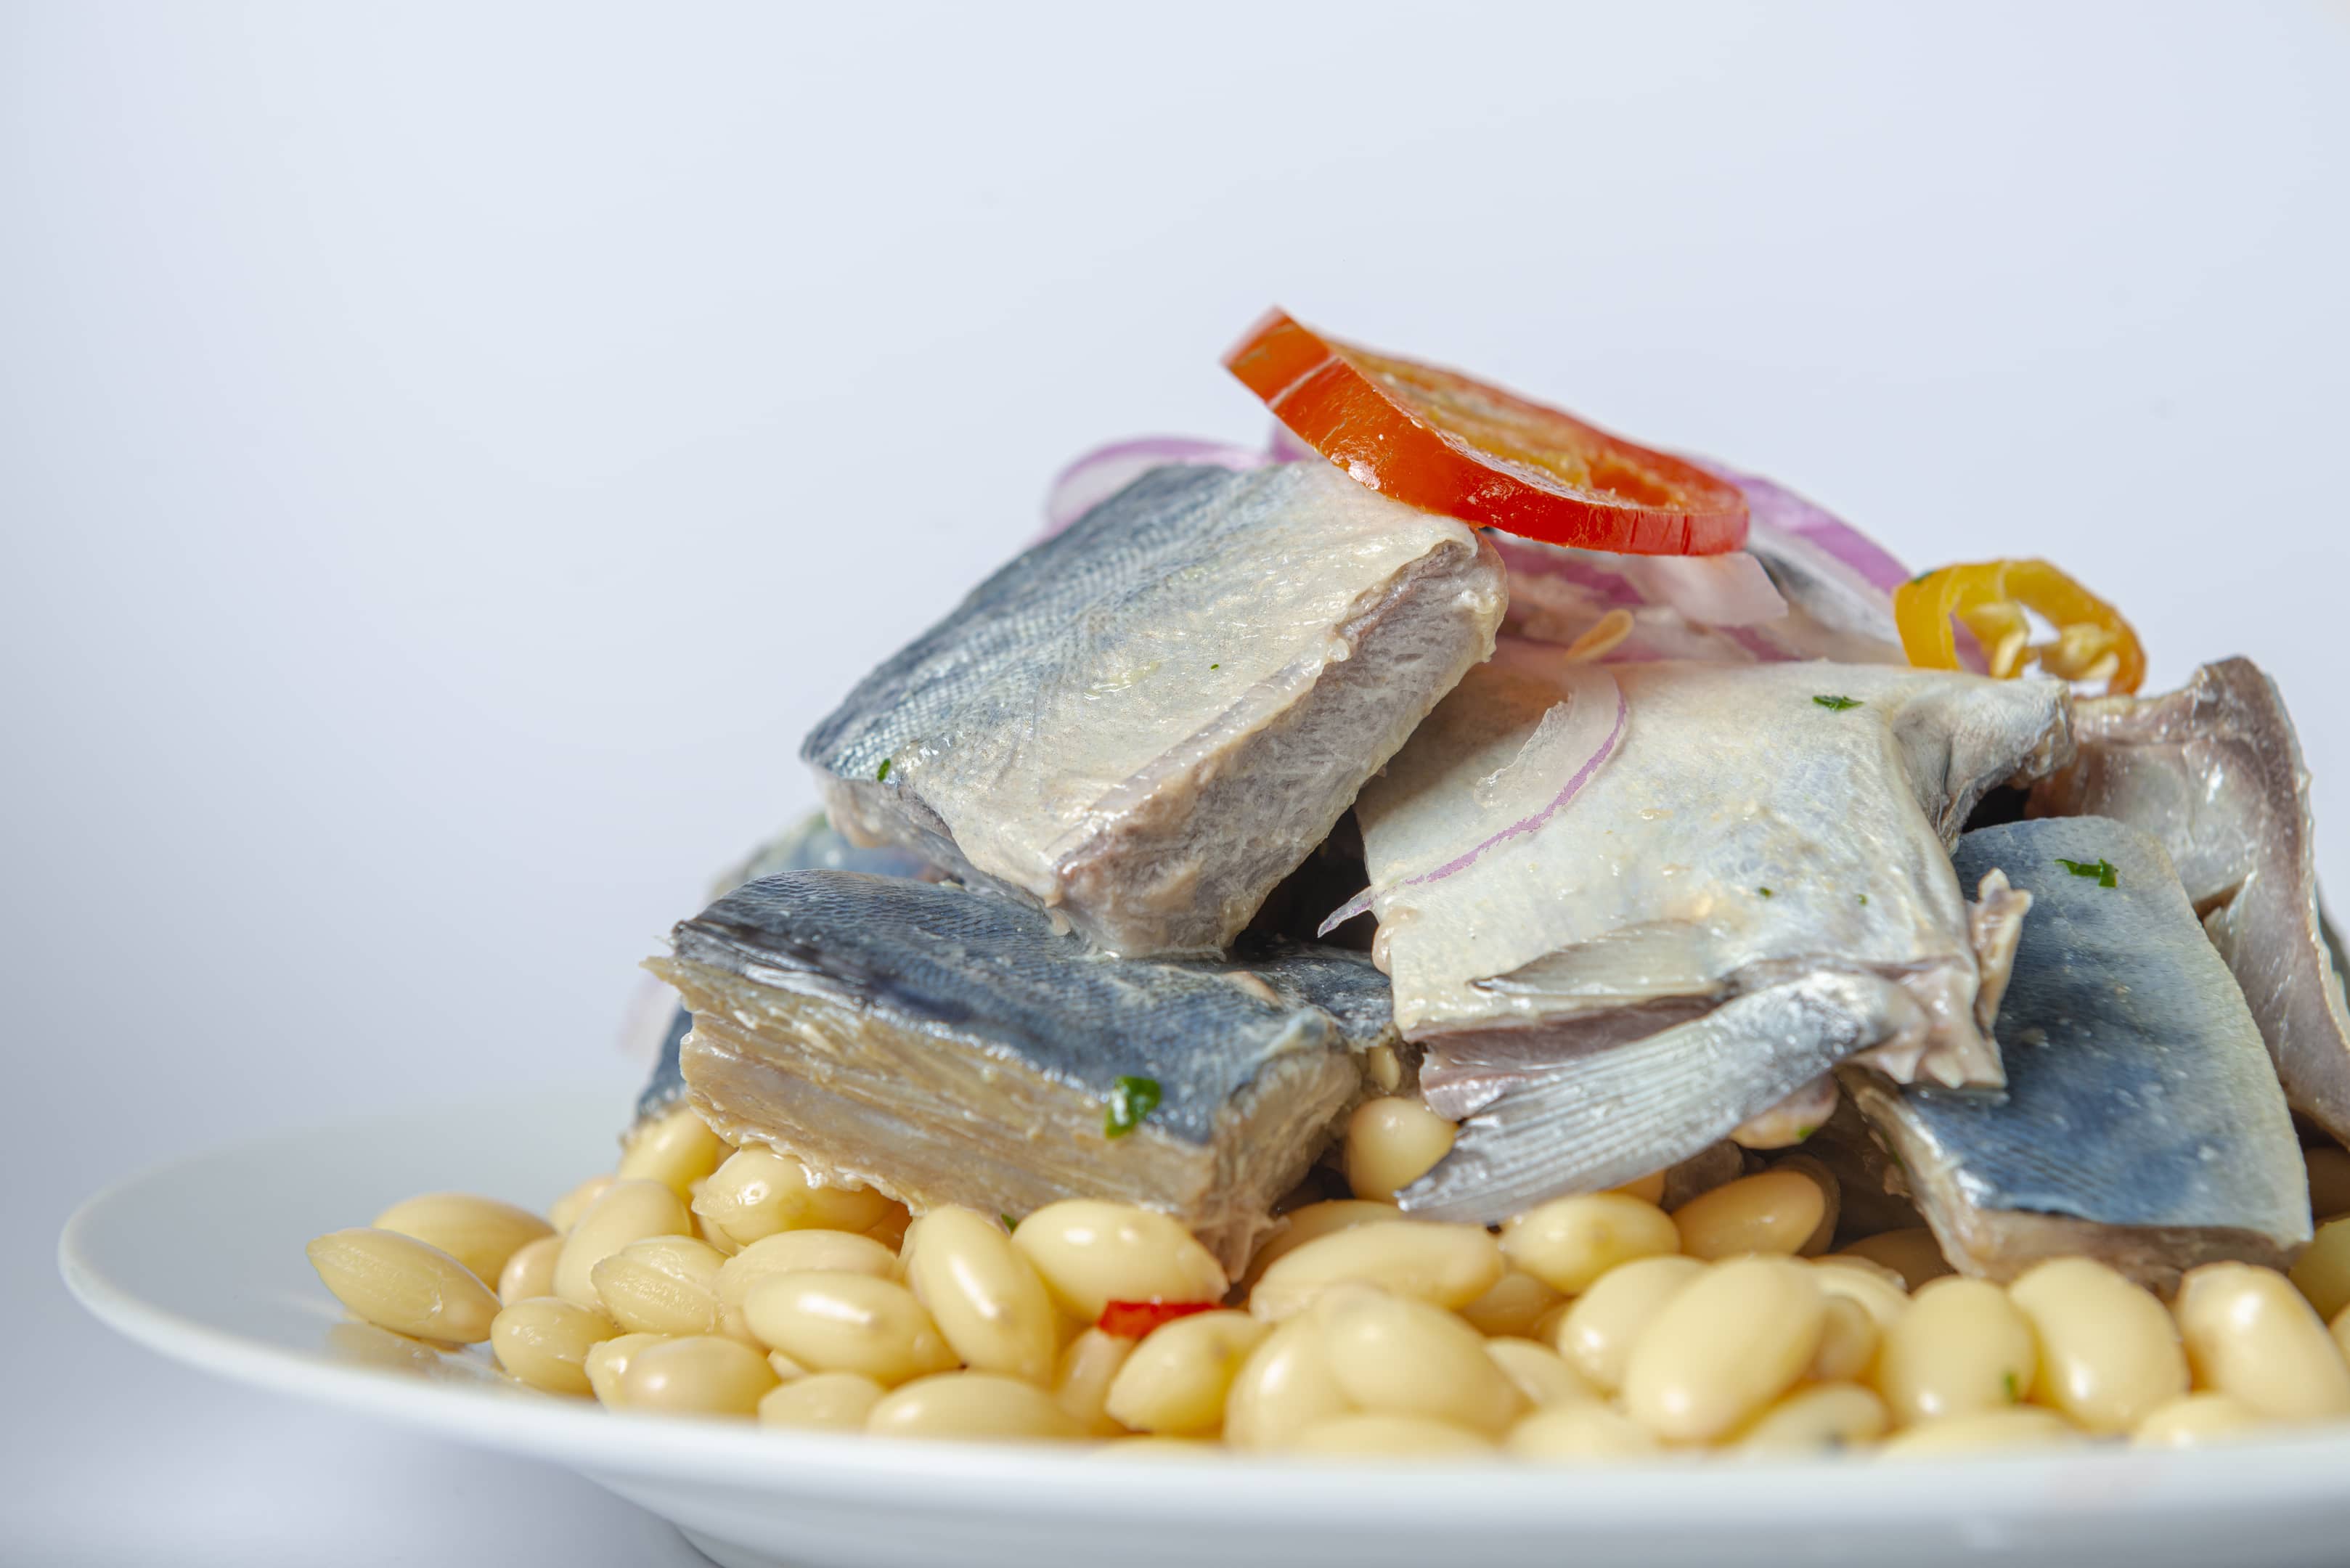 Traditional peruvian mackerel and peruvian beans